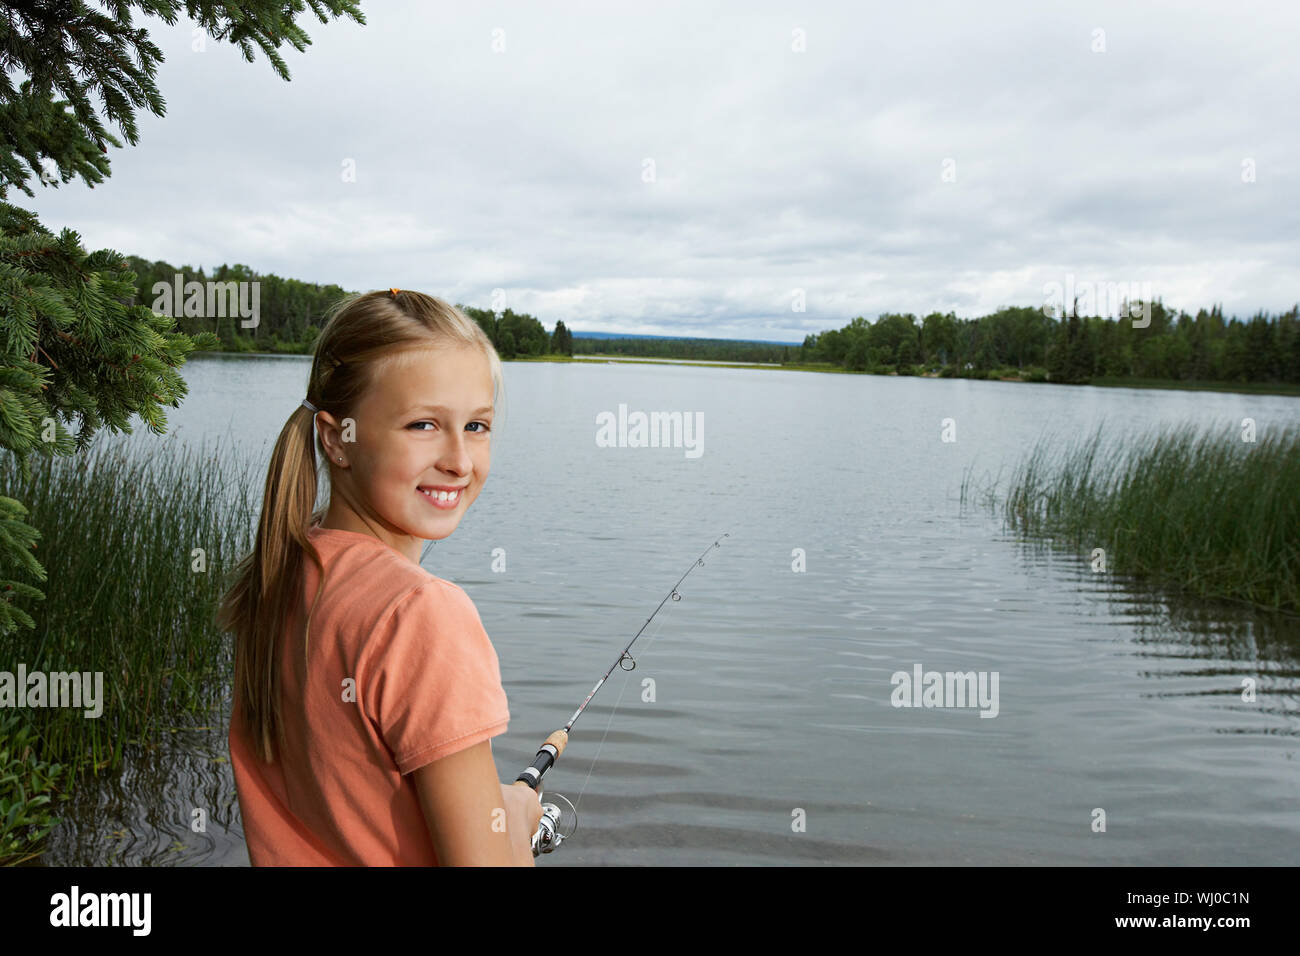 https://c8.alamy.com/comp/WJ0C1N/usa-alaska-teenage-girl-fishing-at-lake-portrait-WJ0C1N.jpg